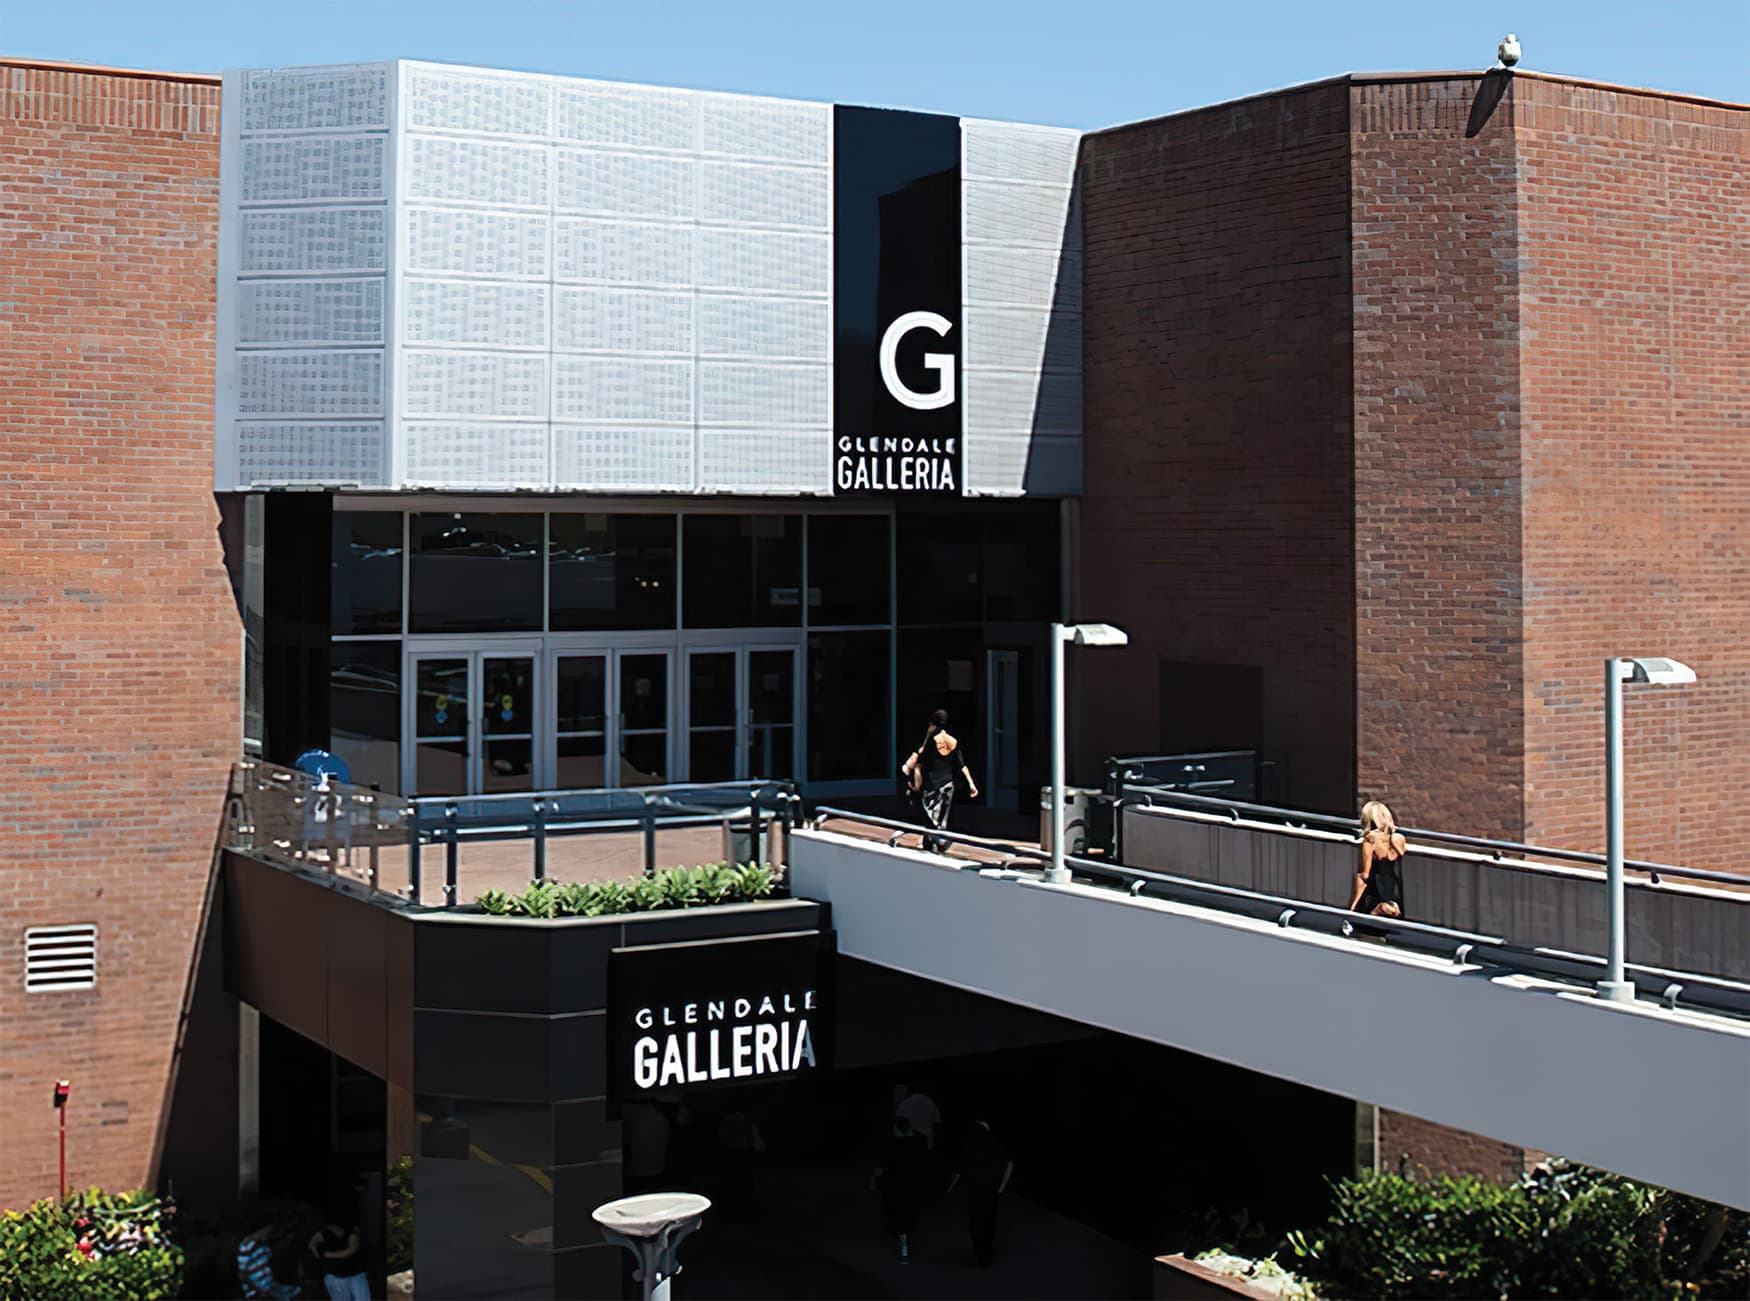 Glendale Galleria. A retail destination in Glendale, California. Project Facade Identity Signage